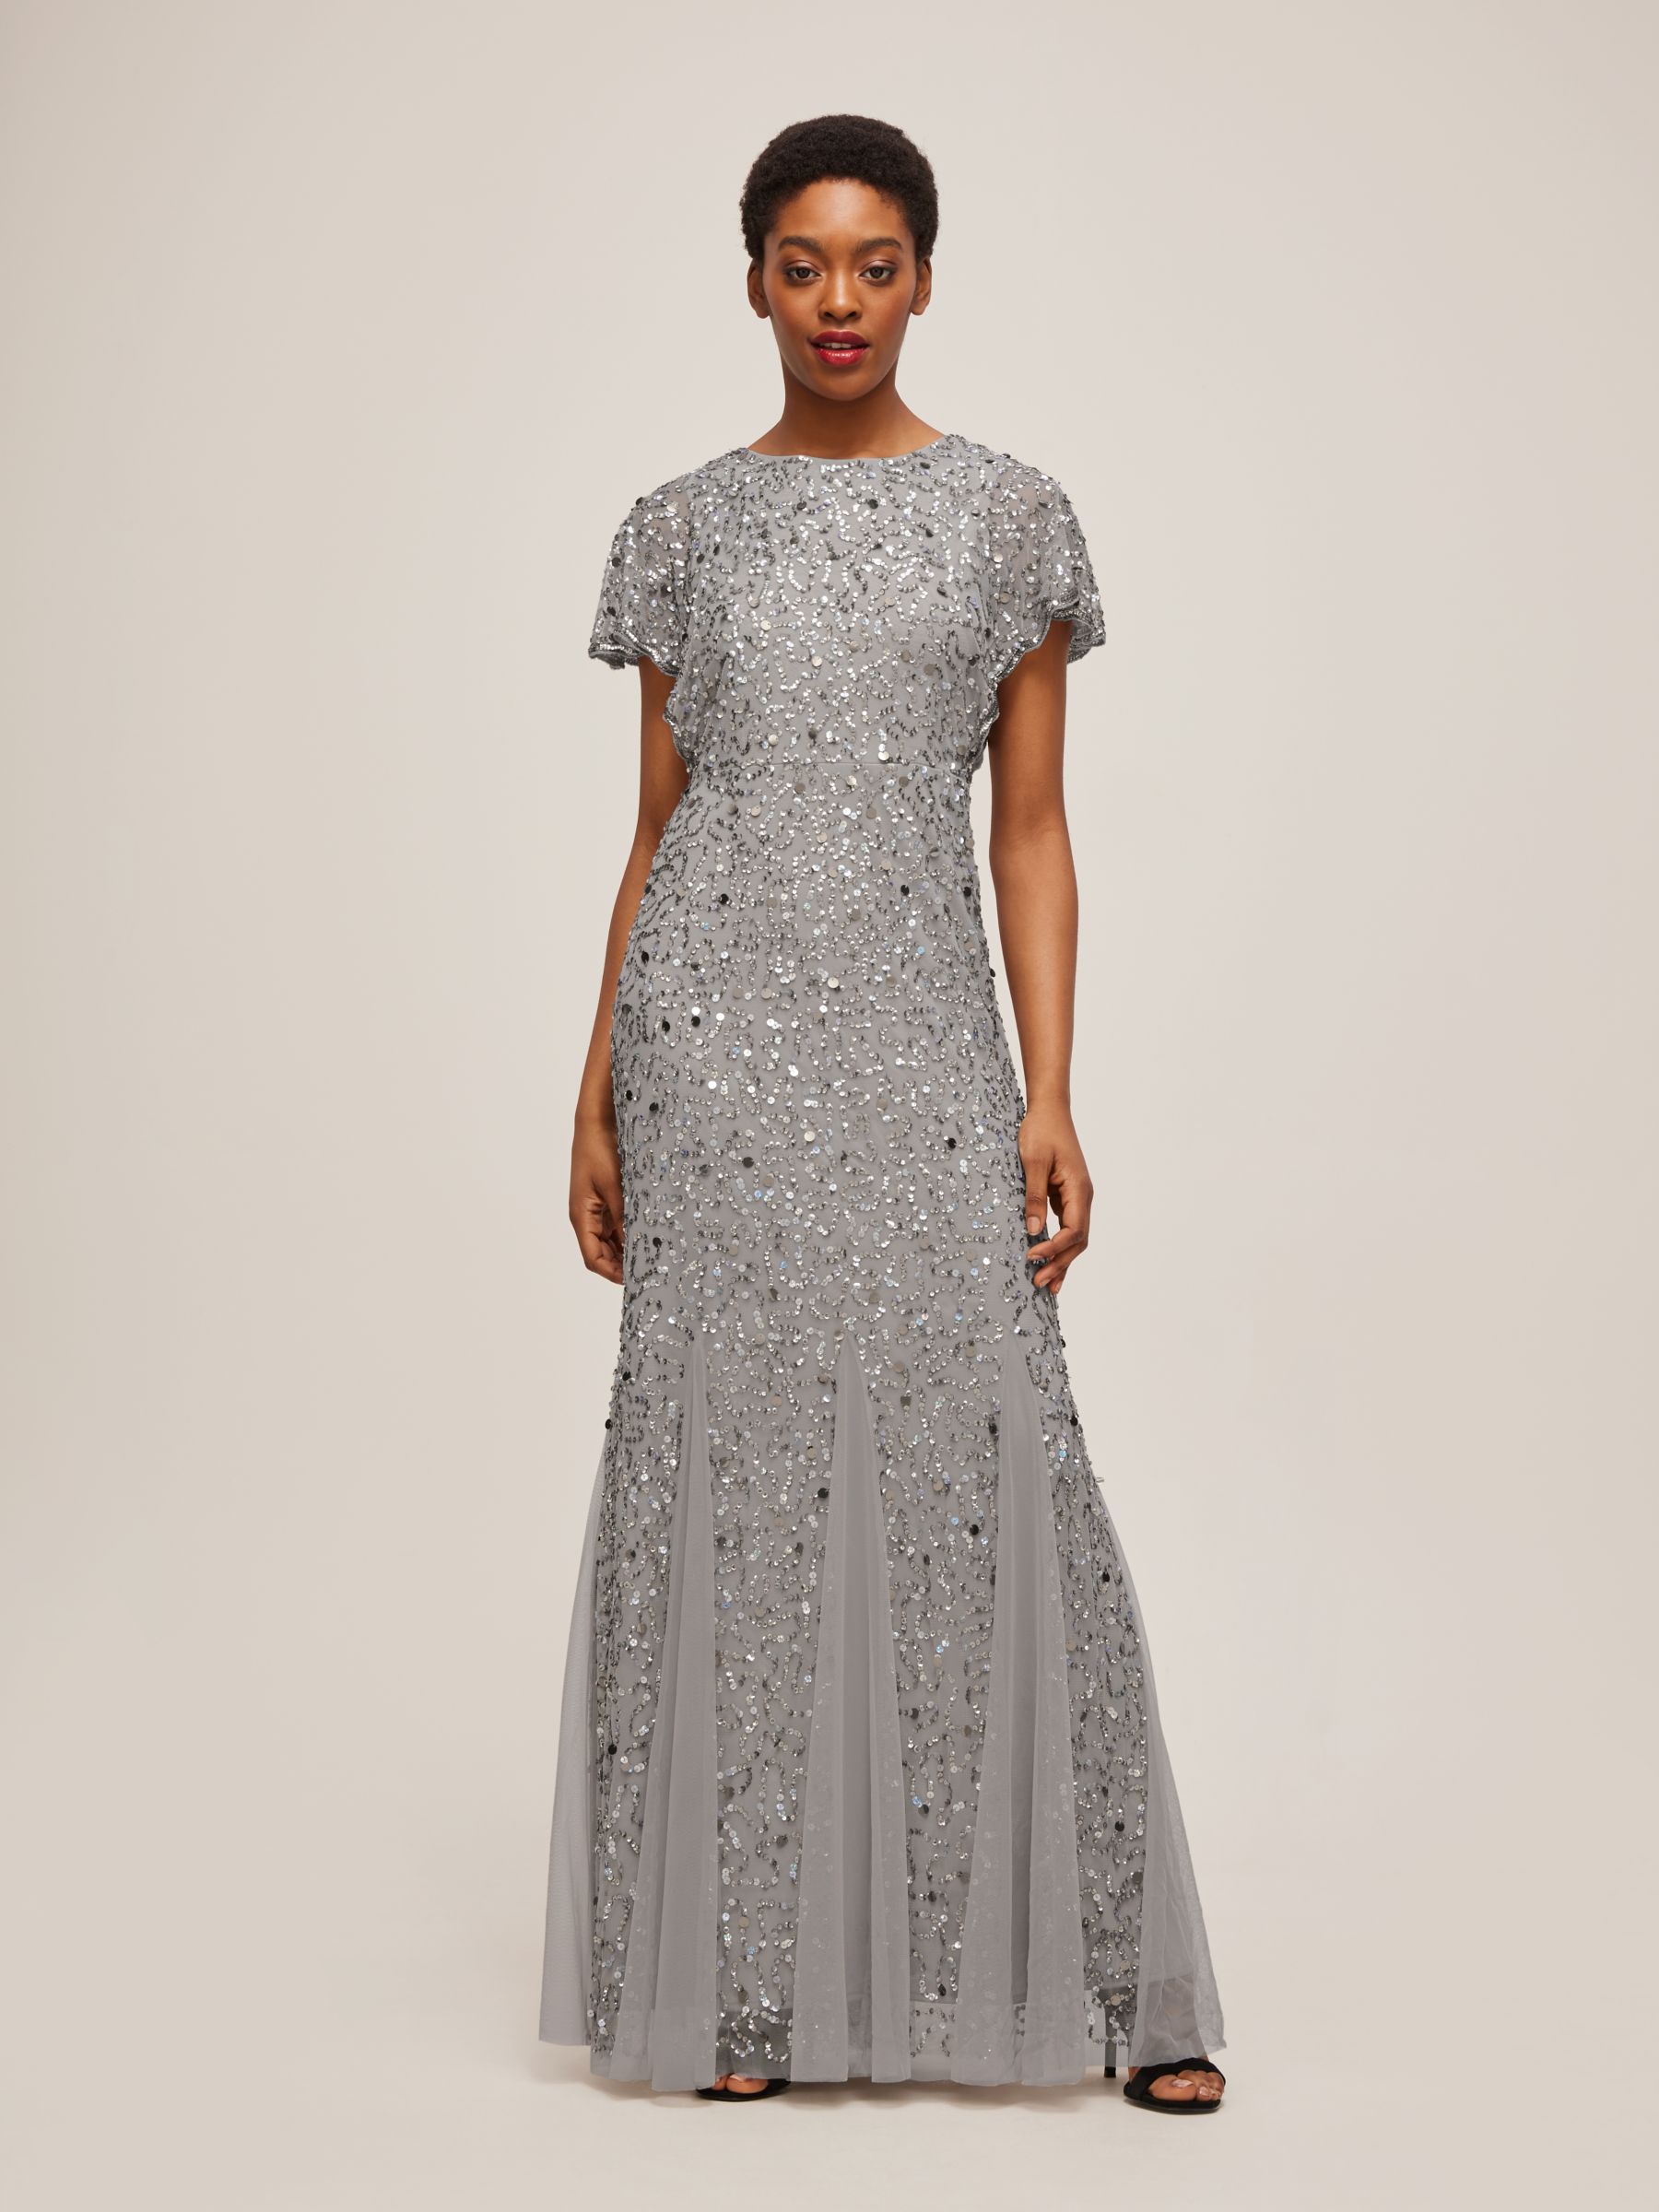 Lace & Beads Sally Embellished Maxi Dress, Grey at John Lewis & Partners